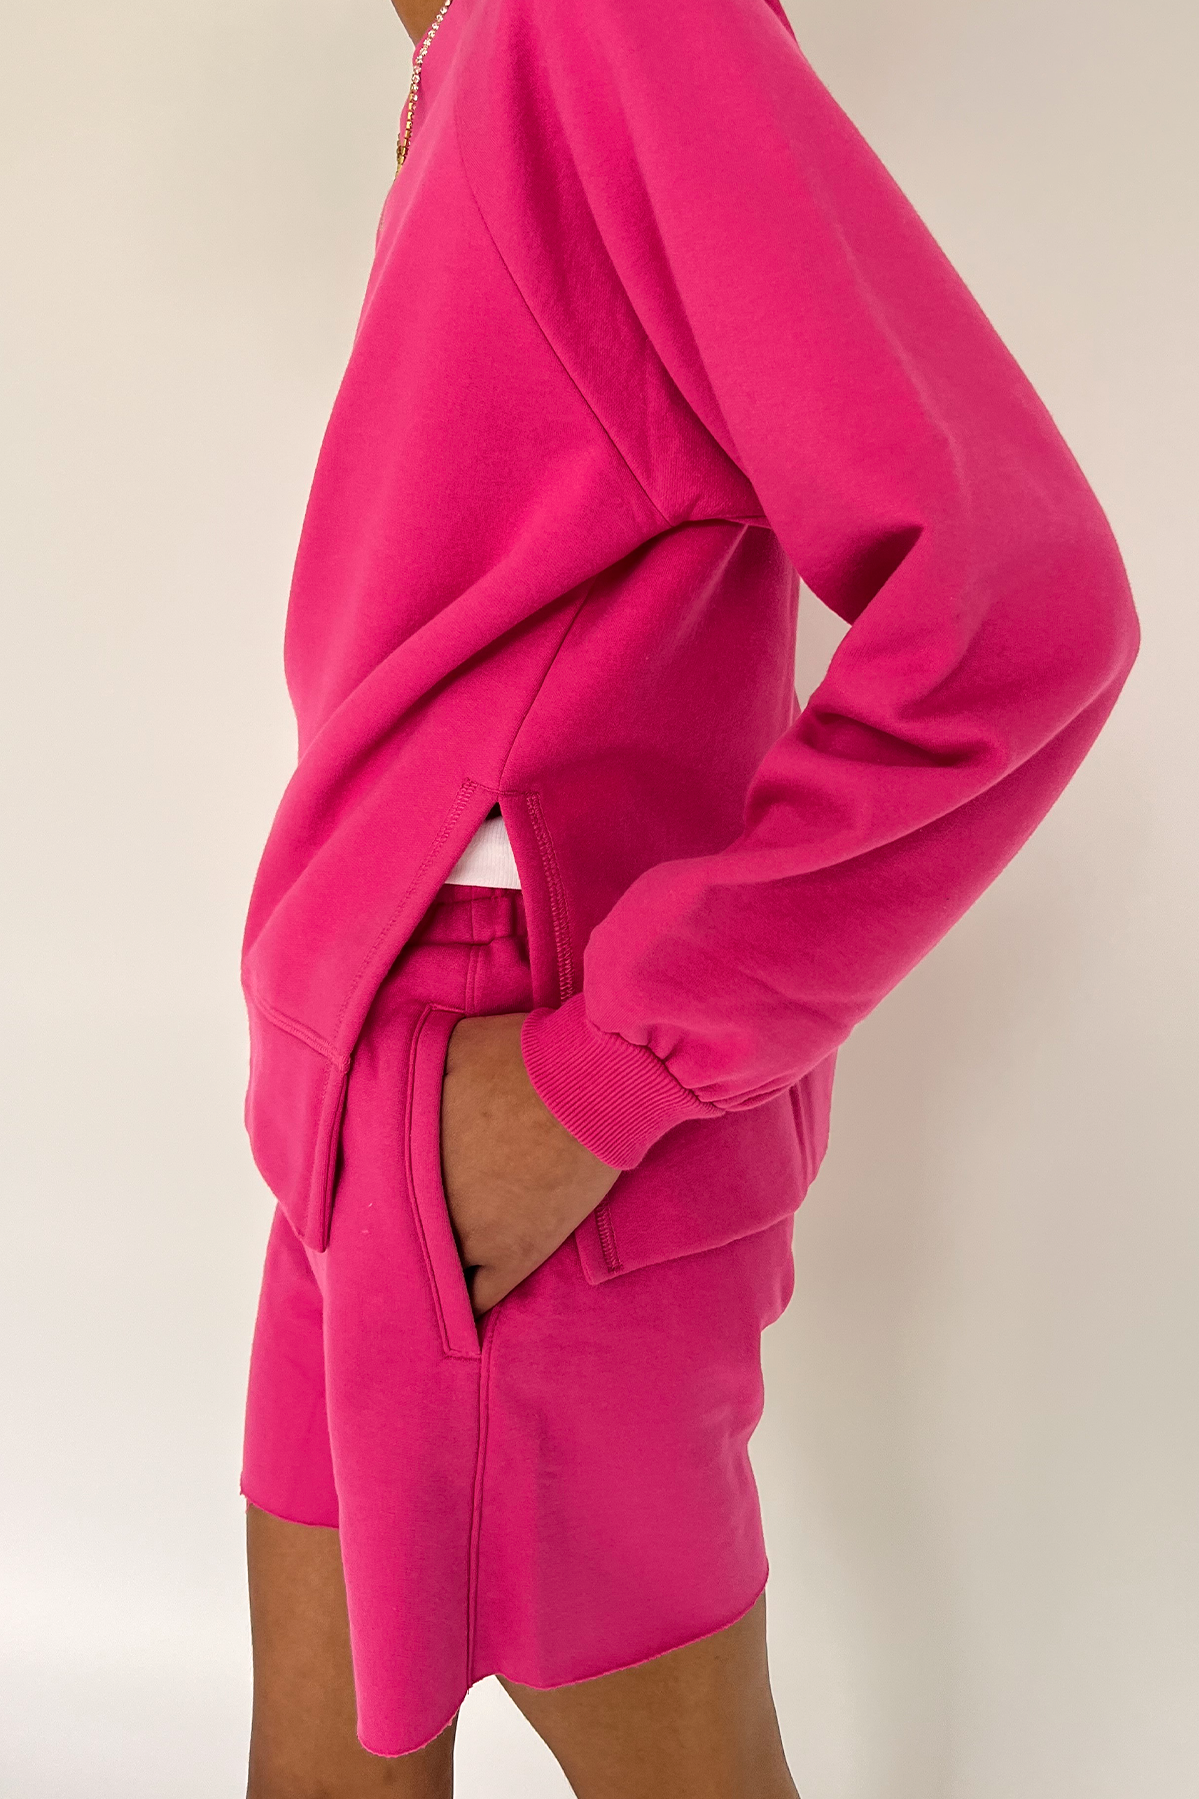 fvwitlyh Pink Sweatshirt Women's Thickening Long Sweatshirt String Hoodie  Dress Pullover Plus Size Dark Gray Small